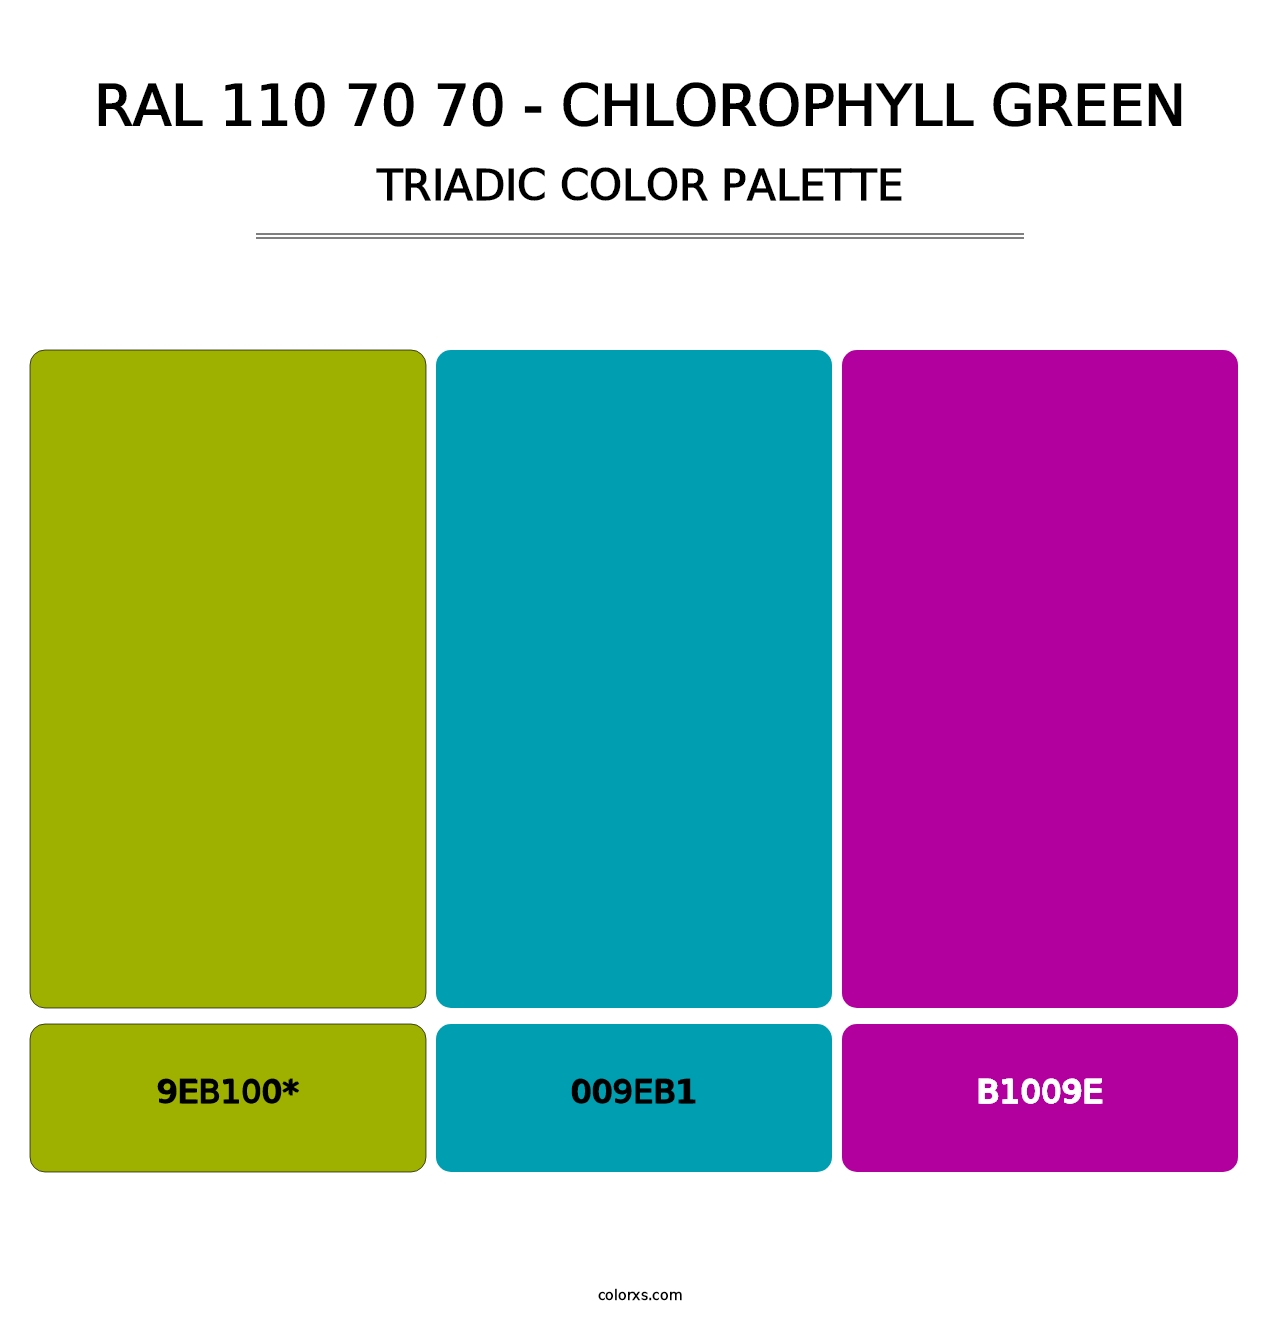 RAL 110 70 70 - Chlorophyll Green - Triadic Color Palette